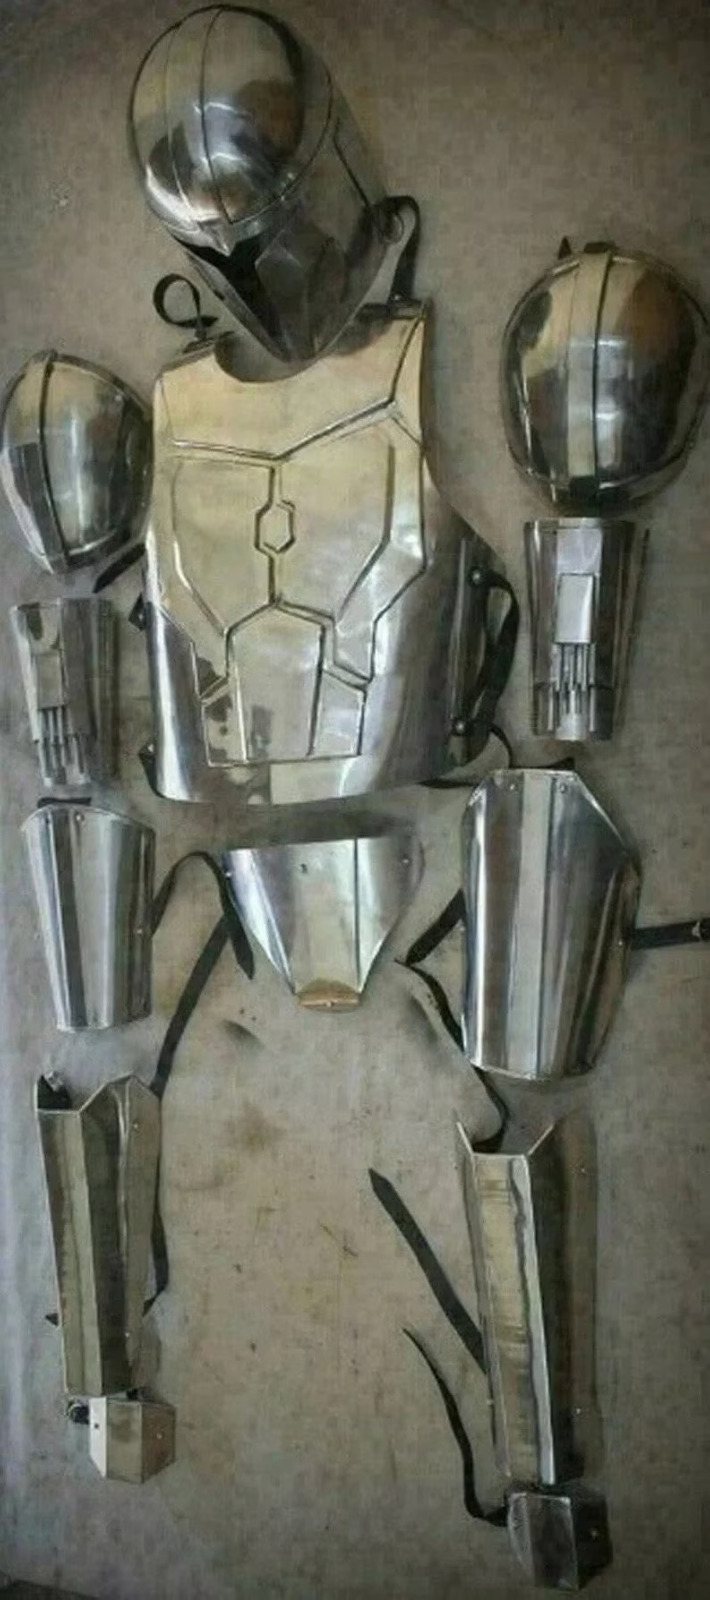 The Mandalorian Star Wars Suit of Armor Medieval Full Body Armor Suit Steel